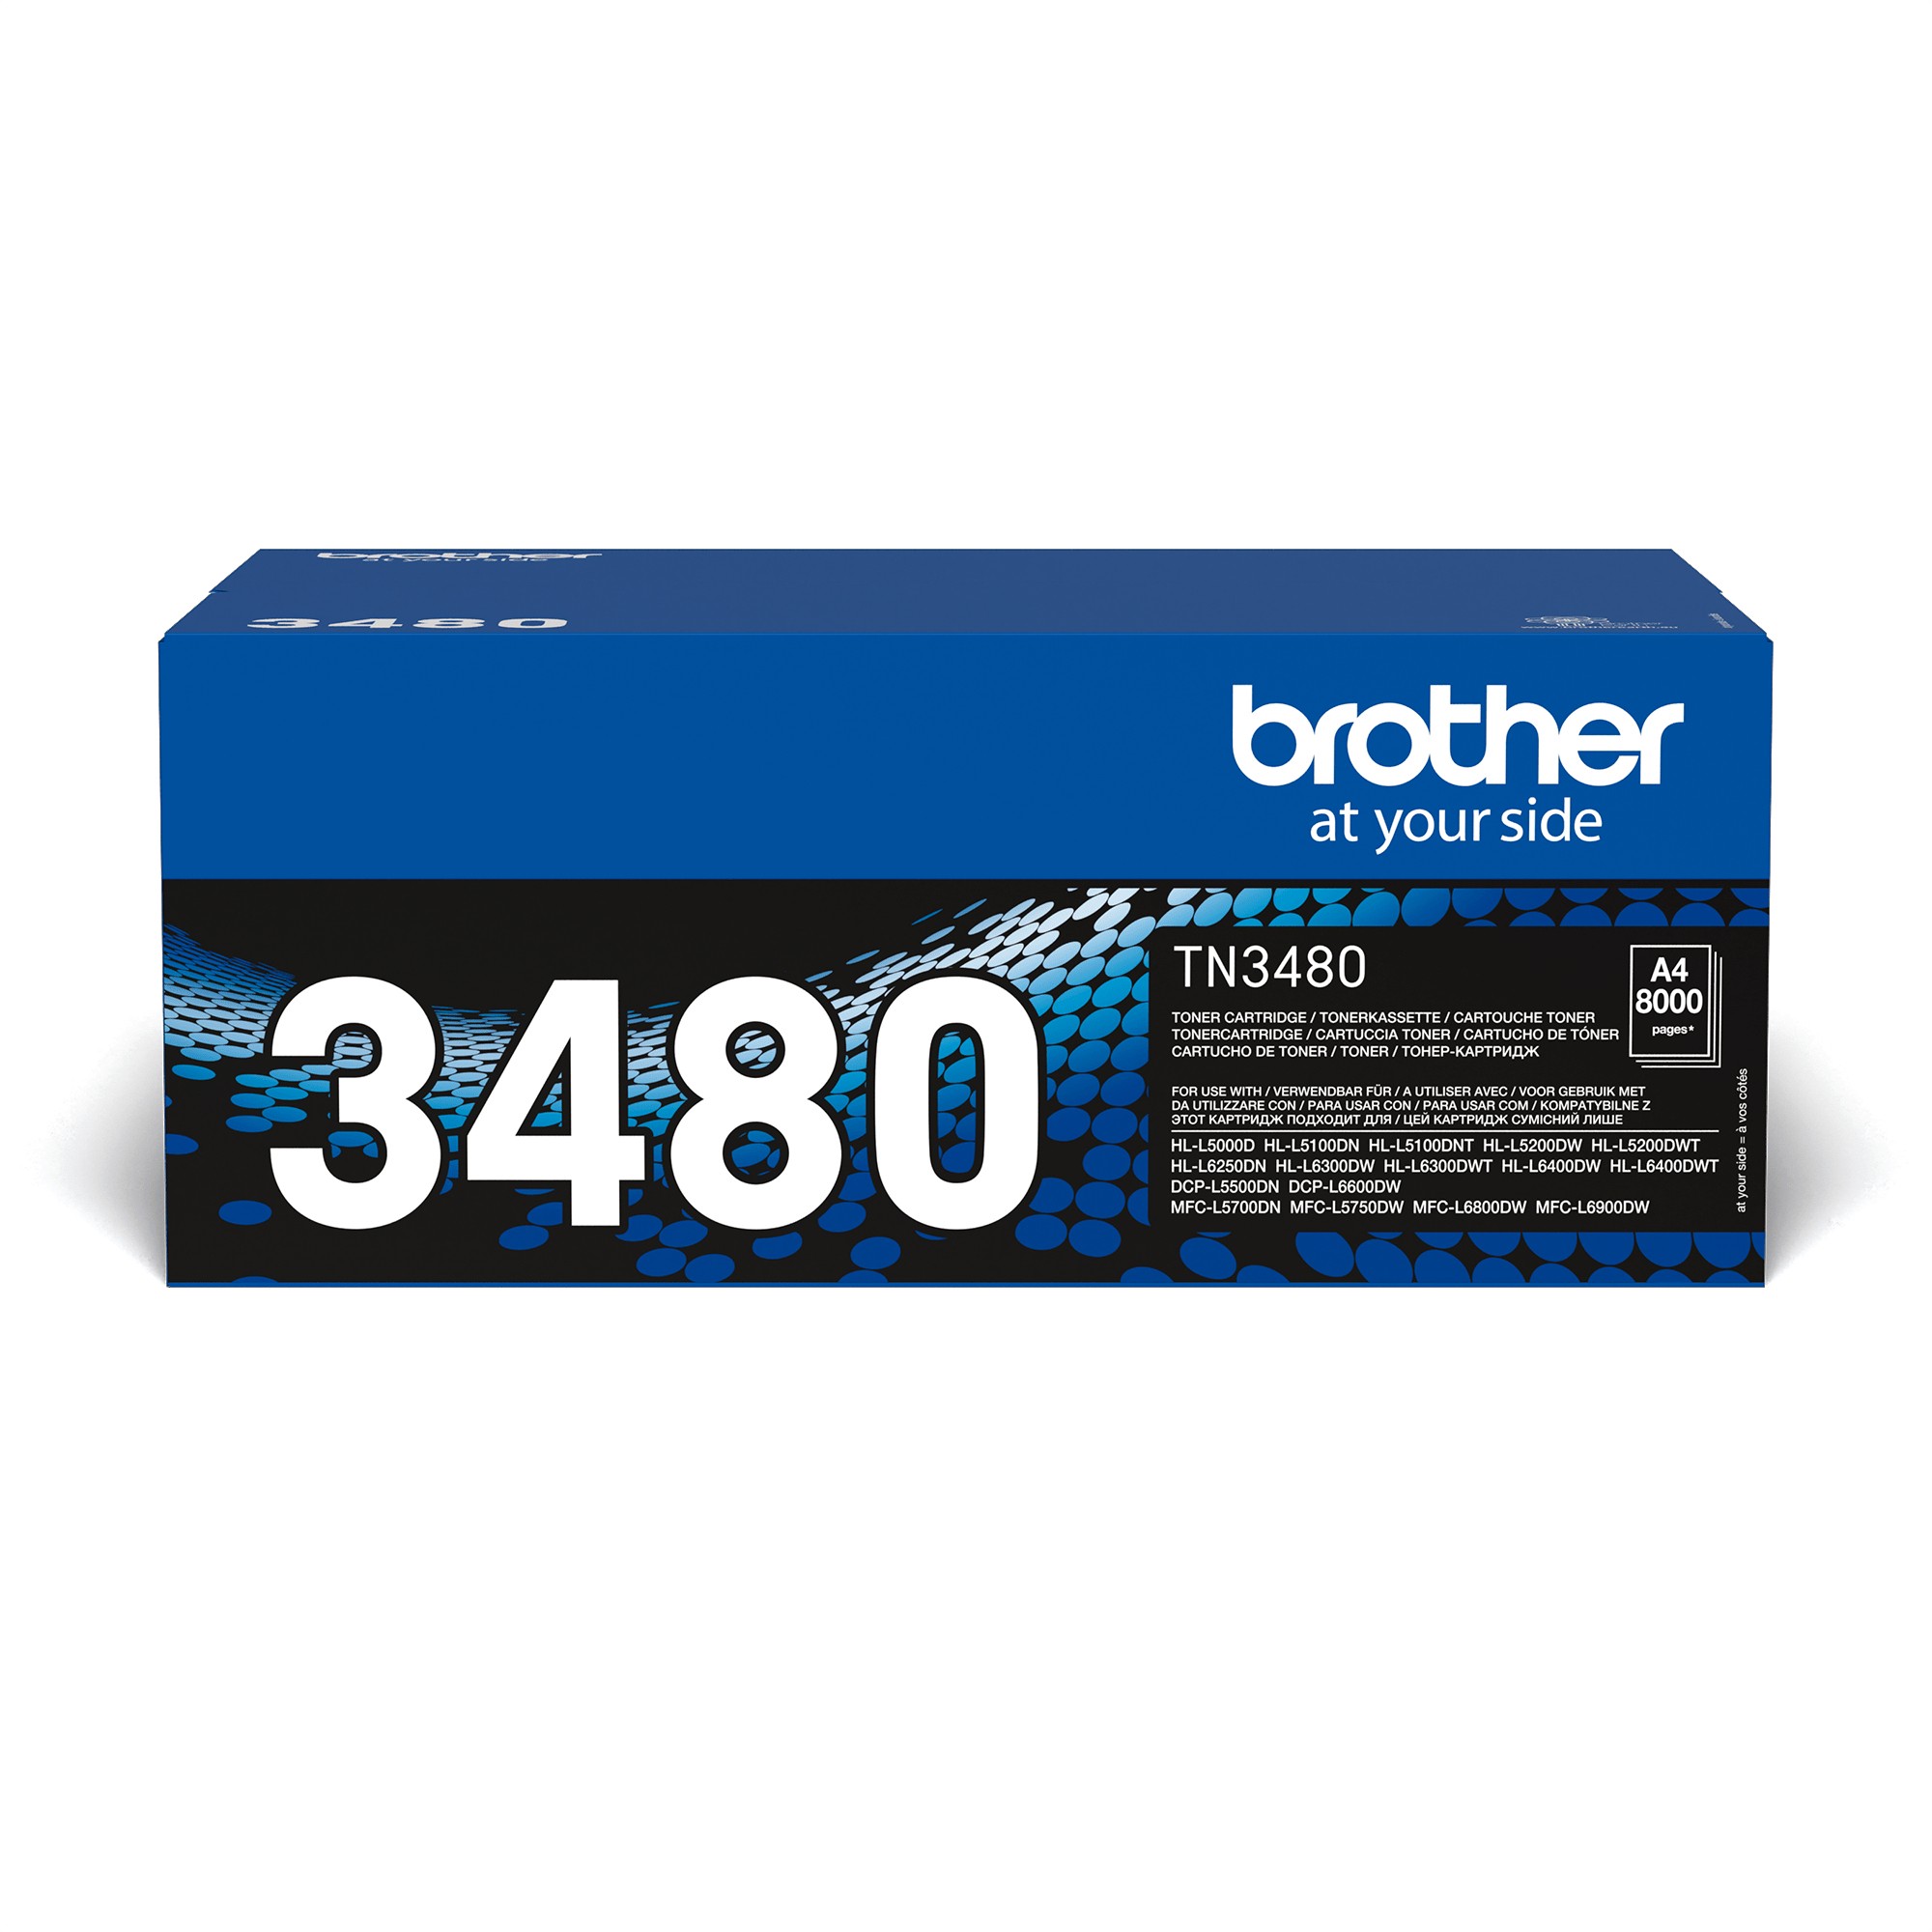 Brother TN-3480 toner cartridge - TN3480